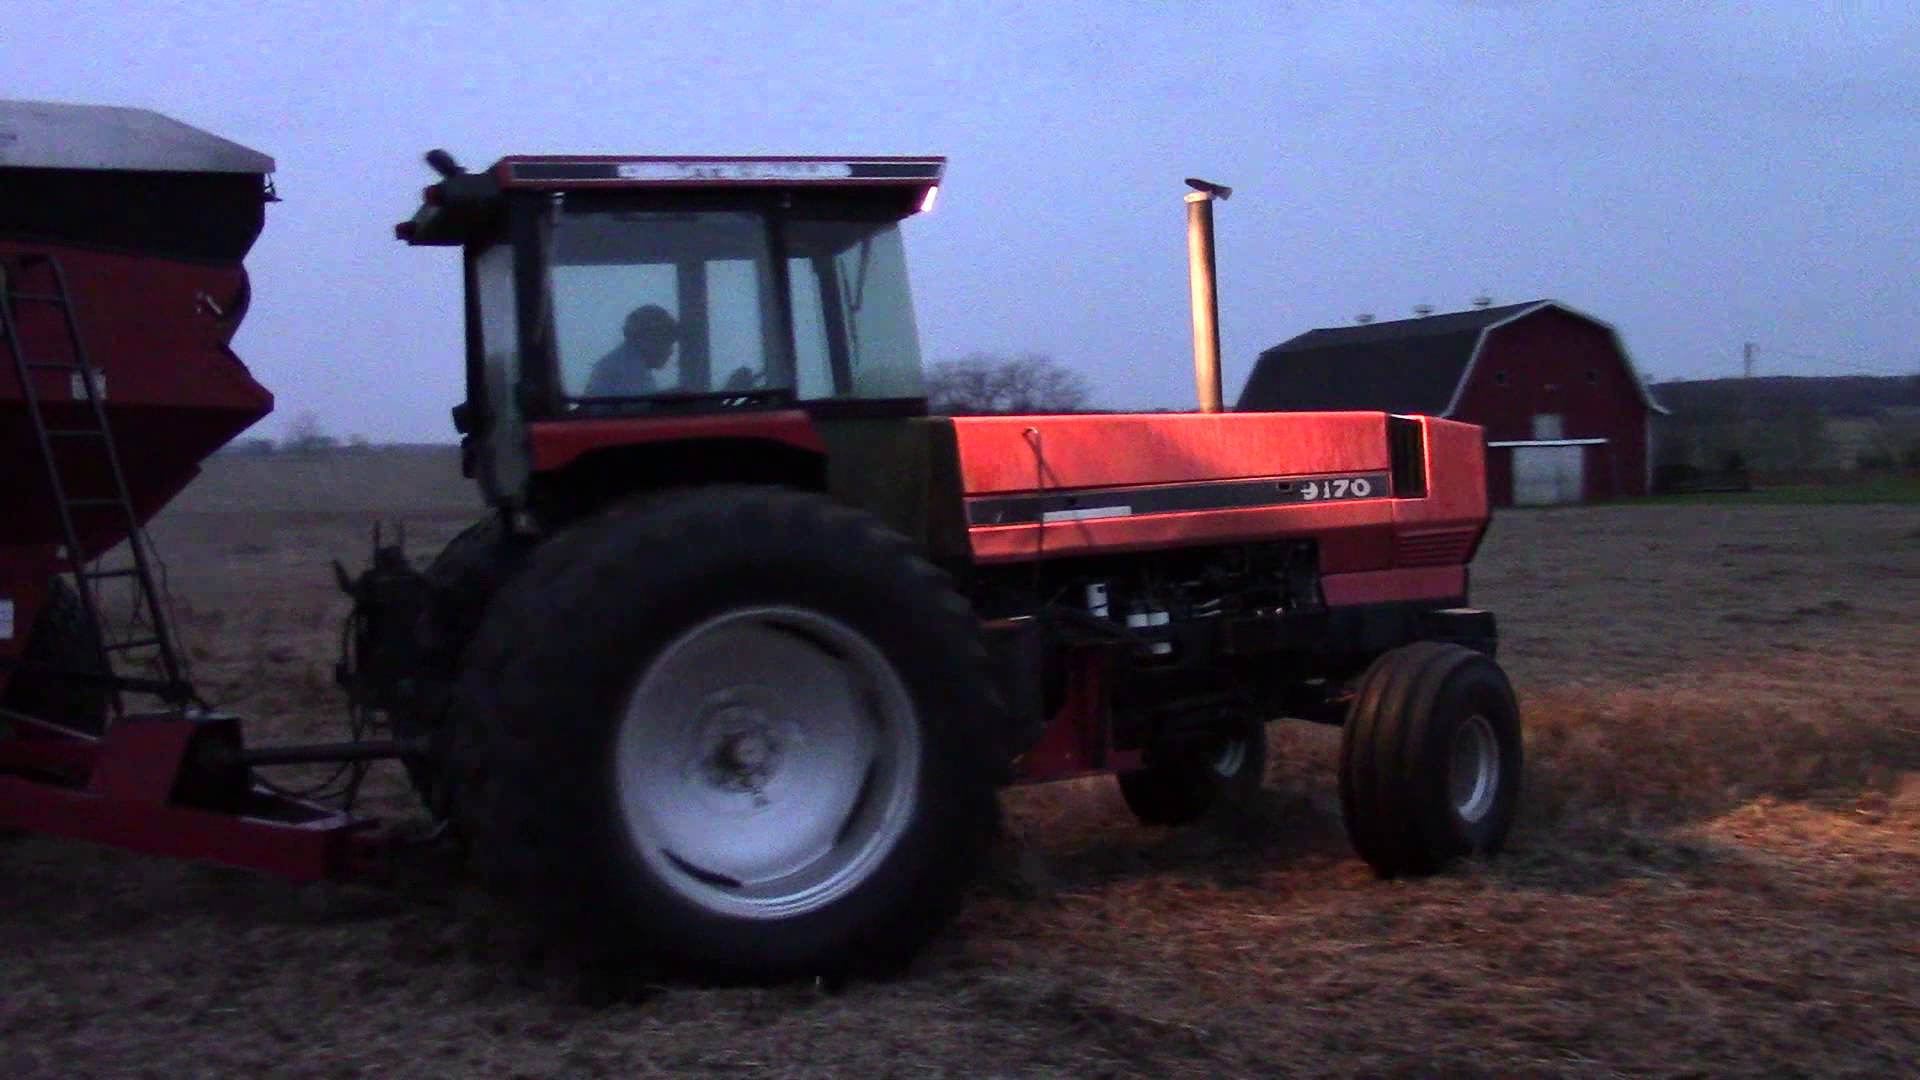 Deutz-Allis 9170 Tractor - YouTube